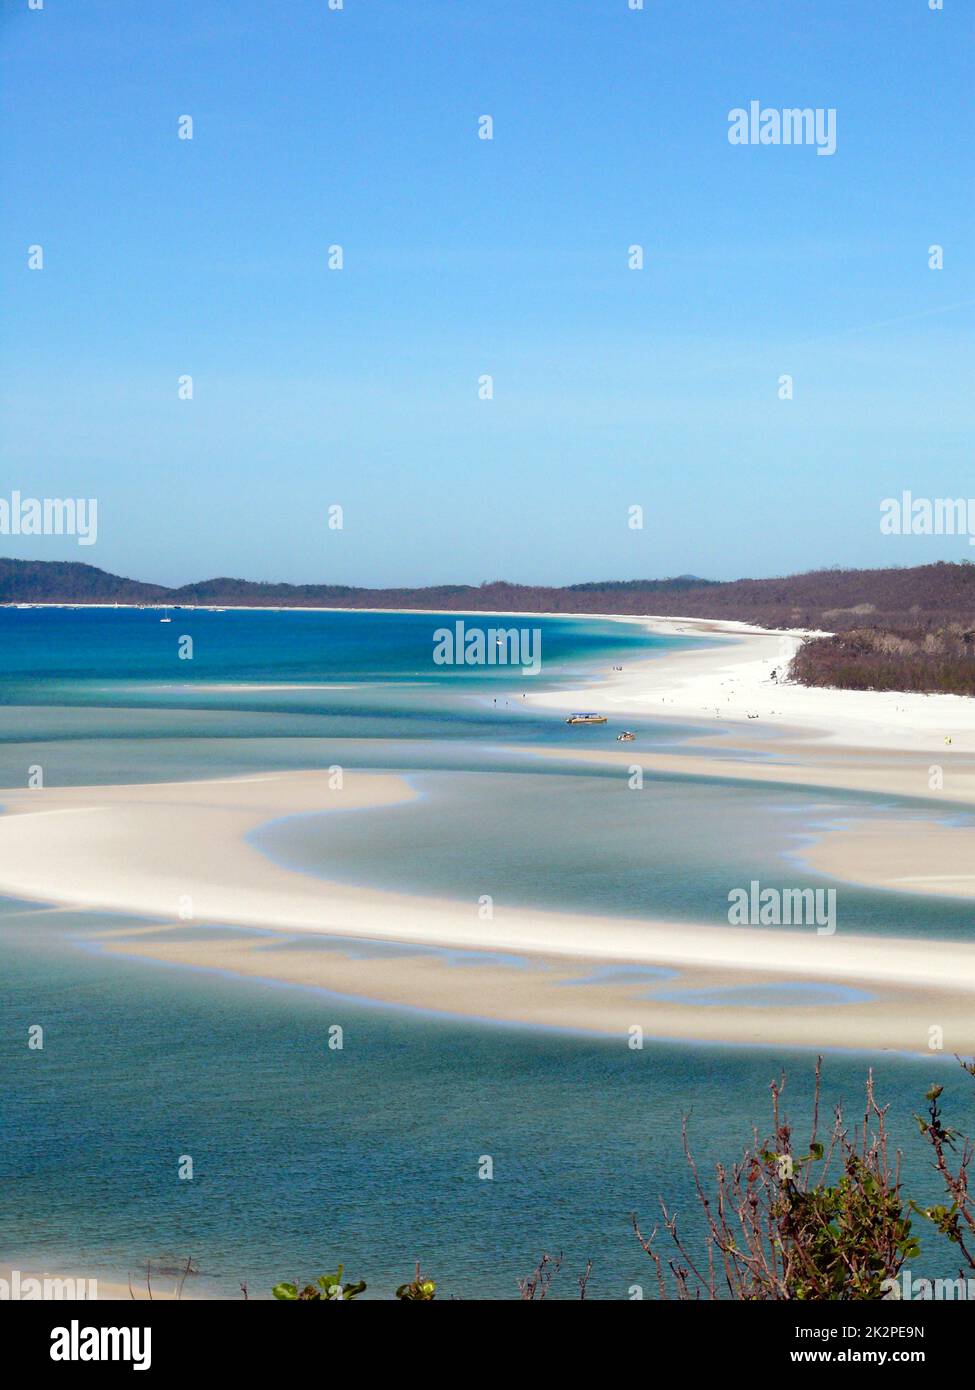 A view of Whitehaven Beach in Australia Stock Photo